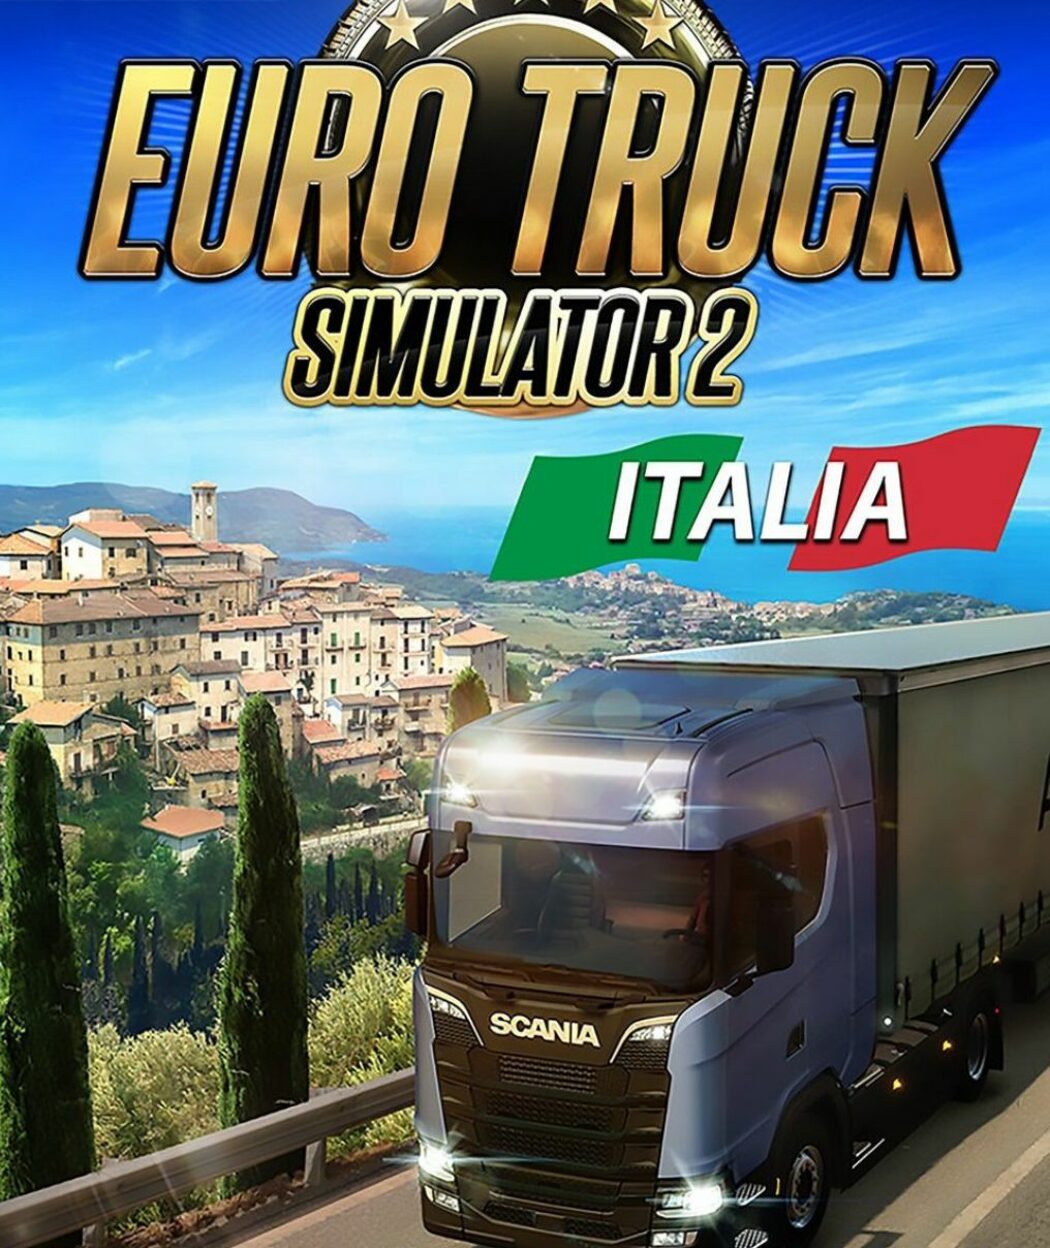 euro truck simulator 2 italia product key